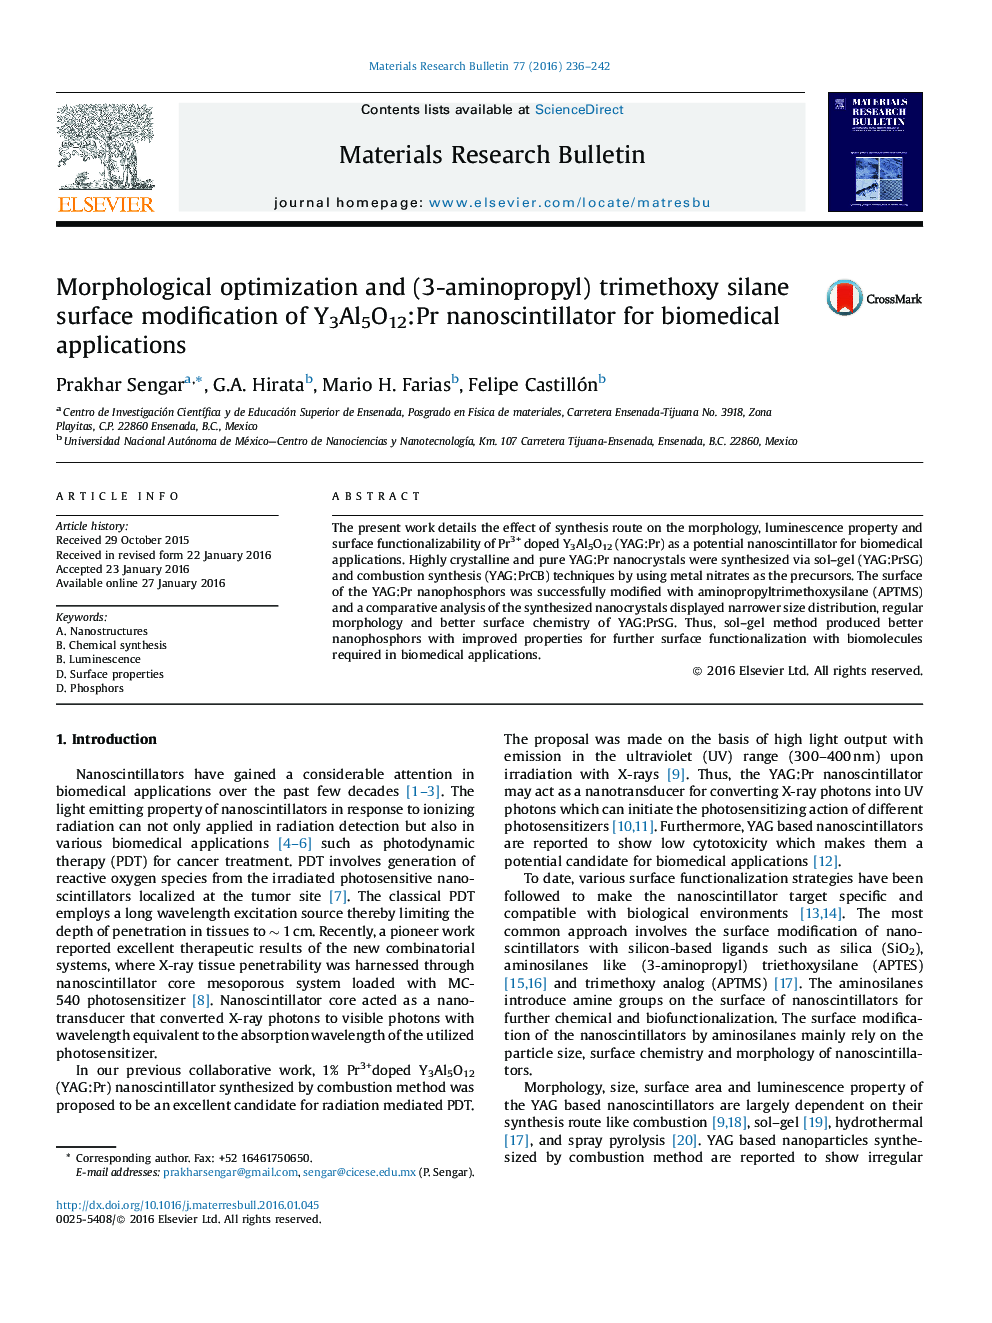 Morphological optimization and (3-aminopropyl) trimethoxy silane surface modification of Y3Al5O12:Pr nanoscintillator for biomedical applications